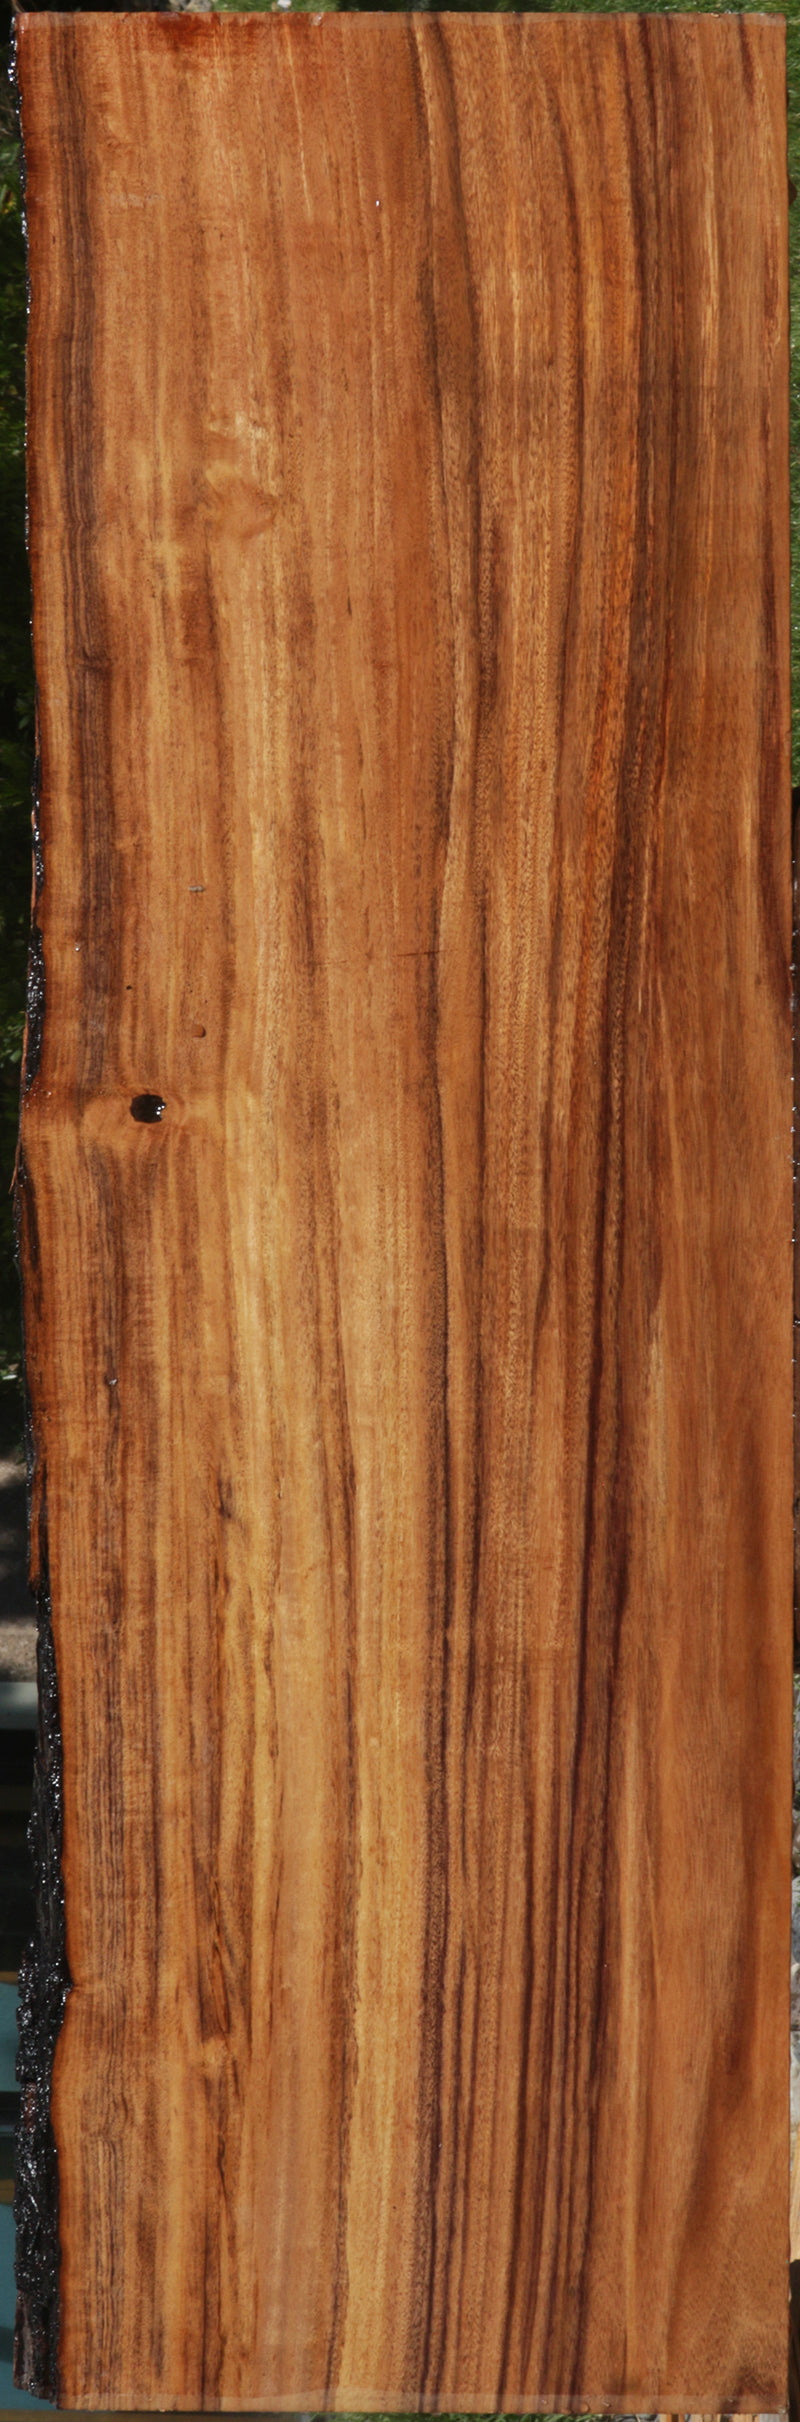 Figured Patagonian Rosewood Live Edge Lumber